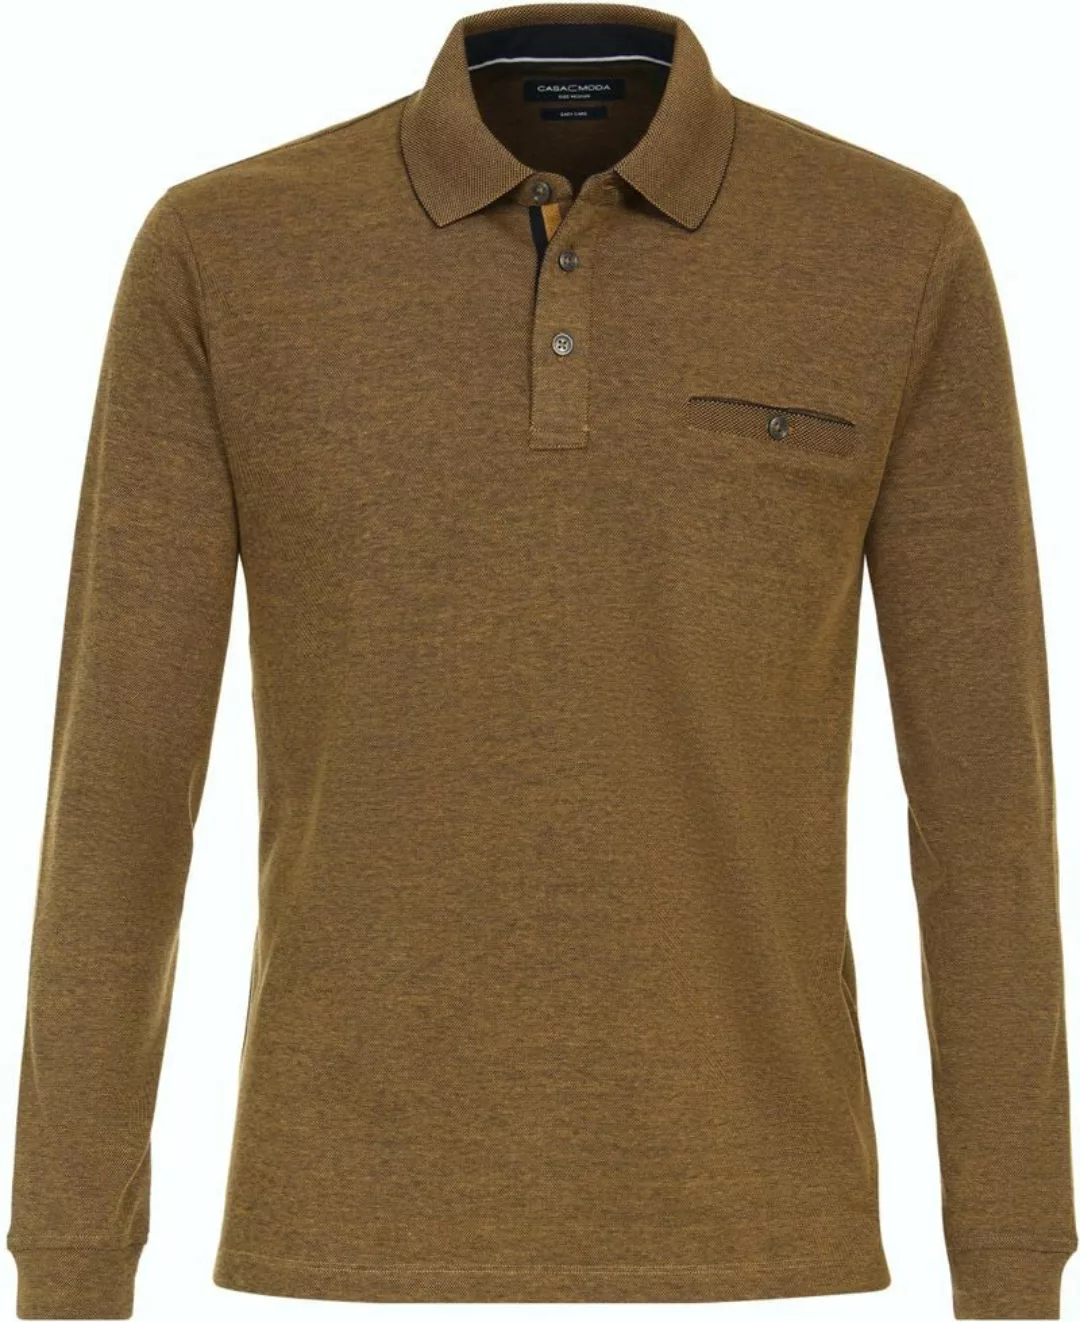 Casa Moda Poloshirt Long Sleeves Gelb - Größe M günstig online kaufen